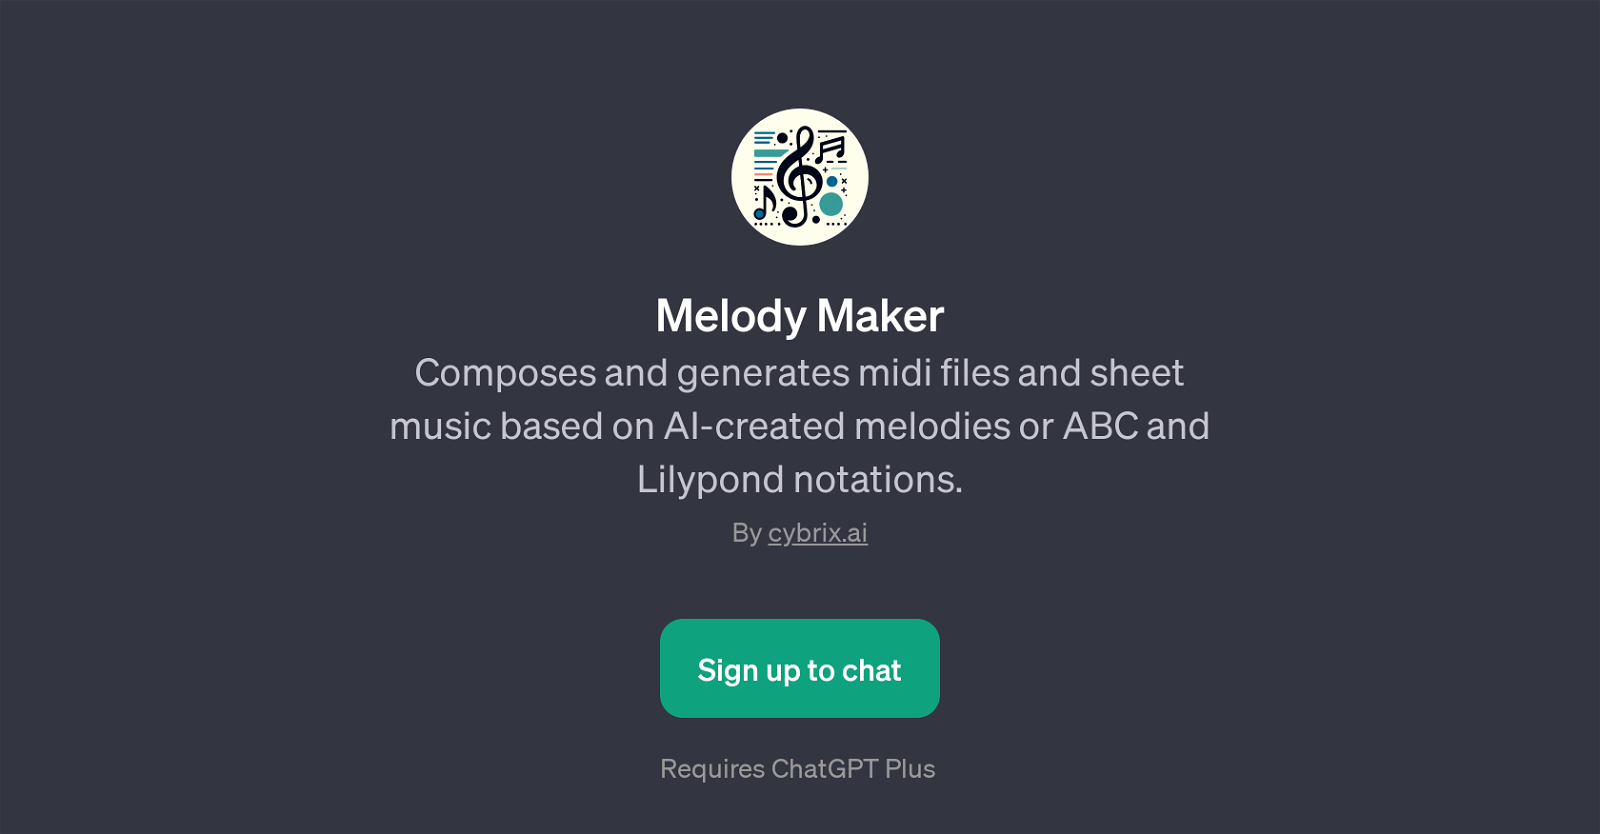 Melody Maker website